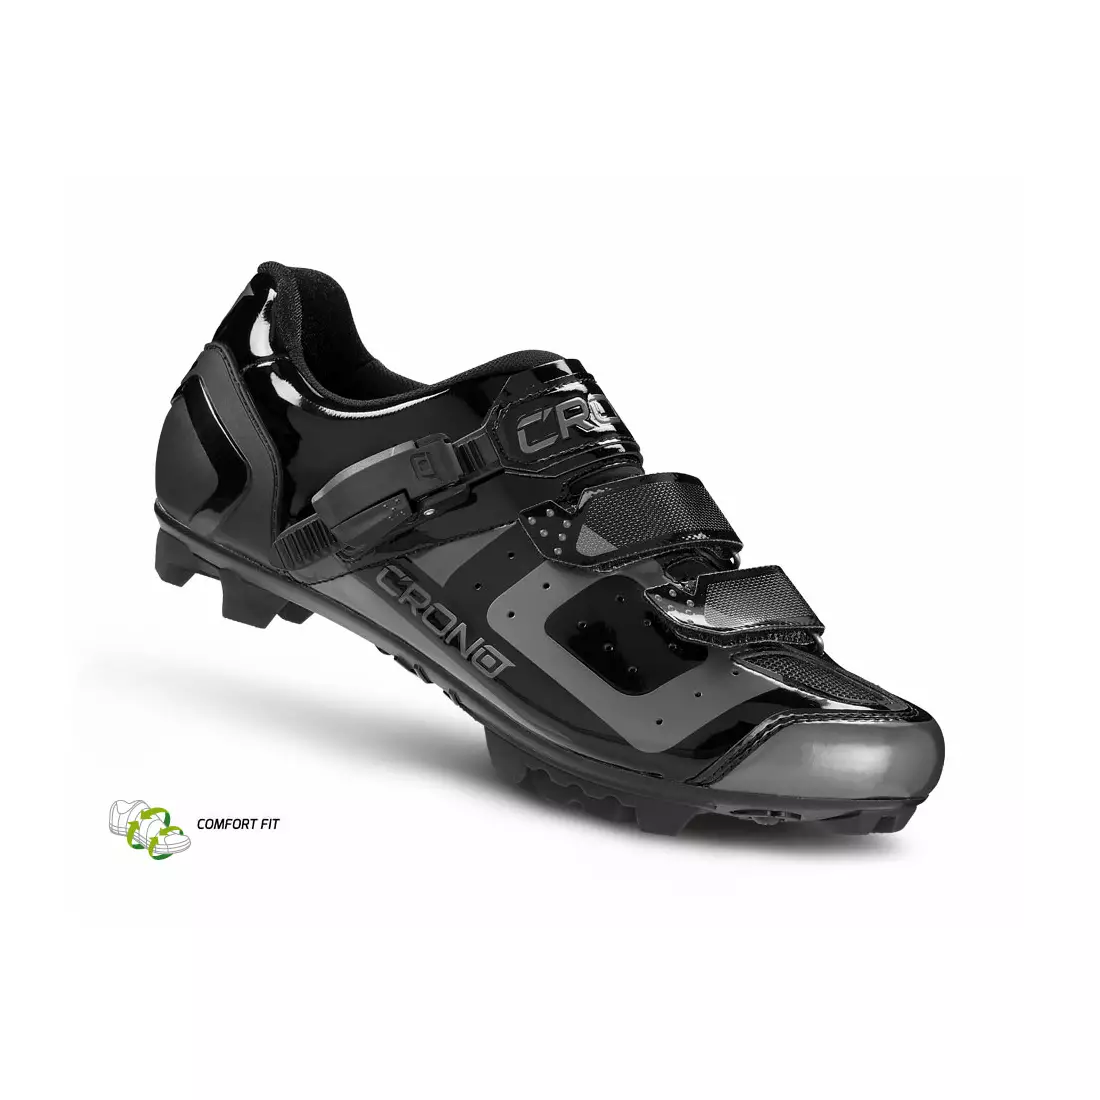 CRONO CX3 nylon - MTB cycling shoes, black